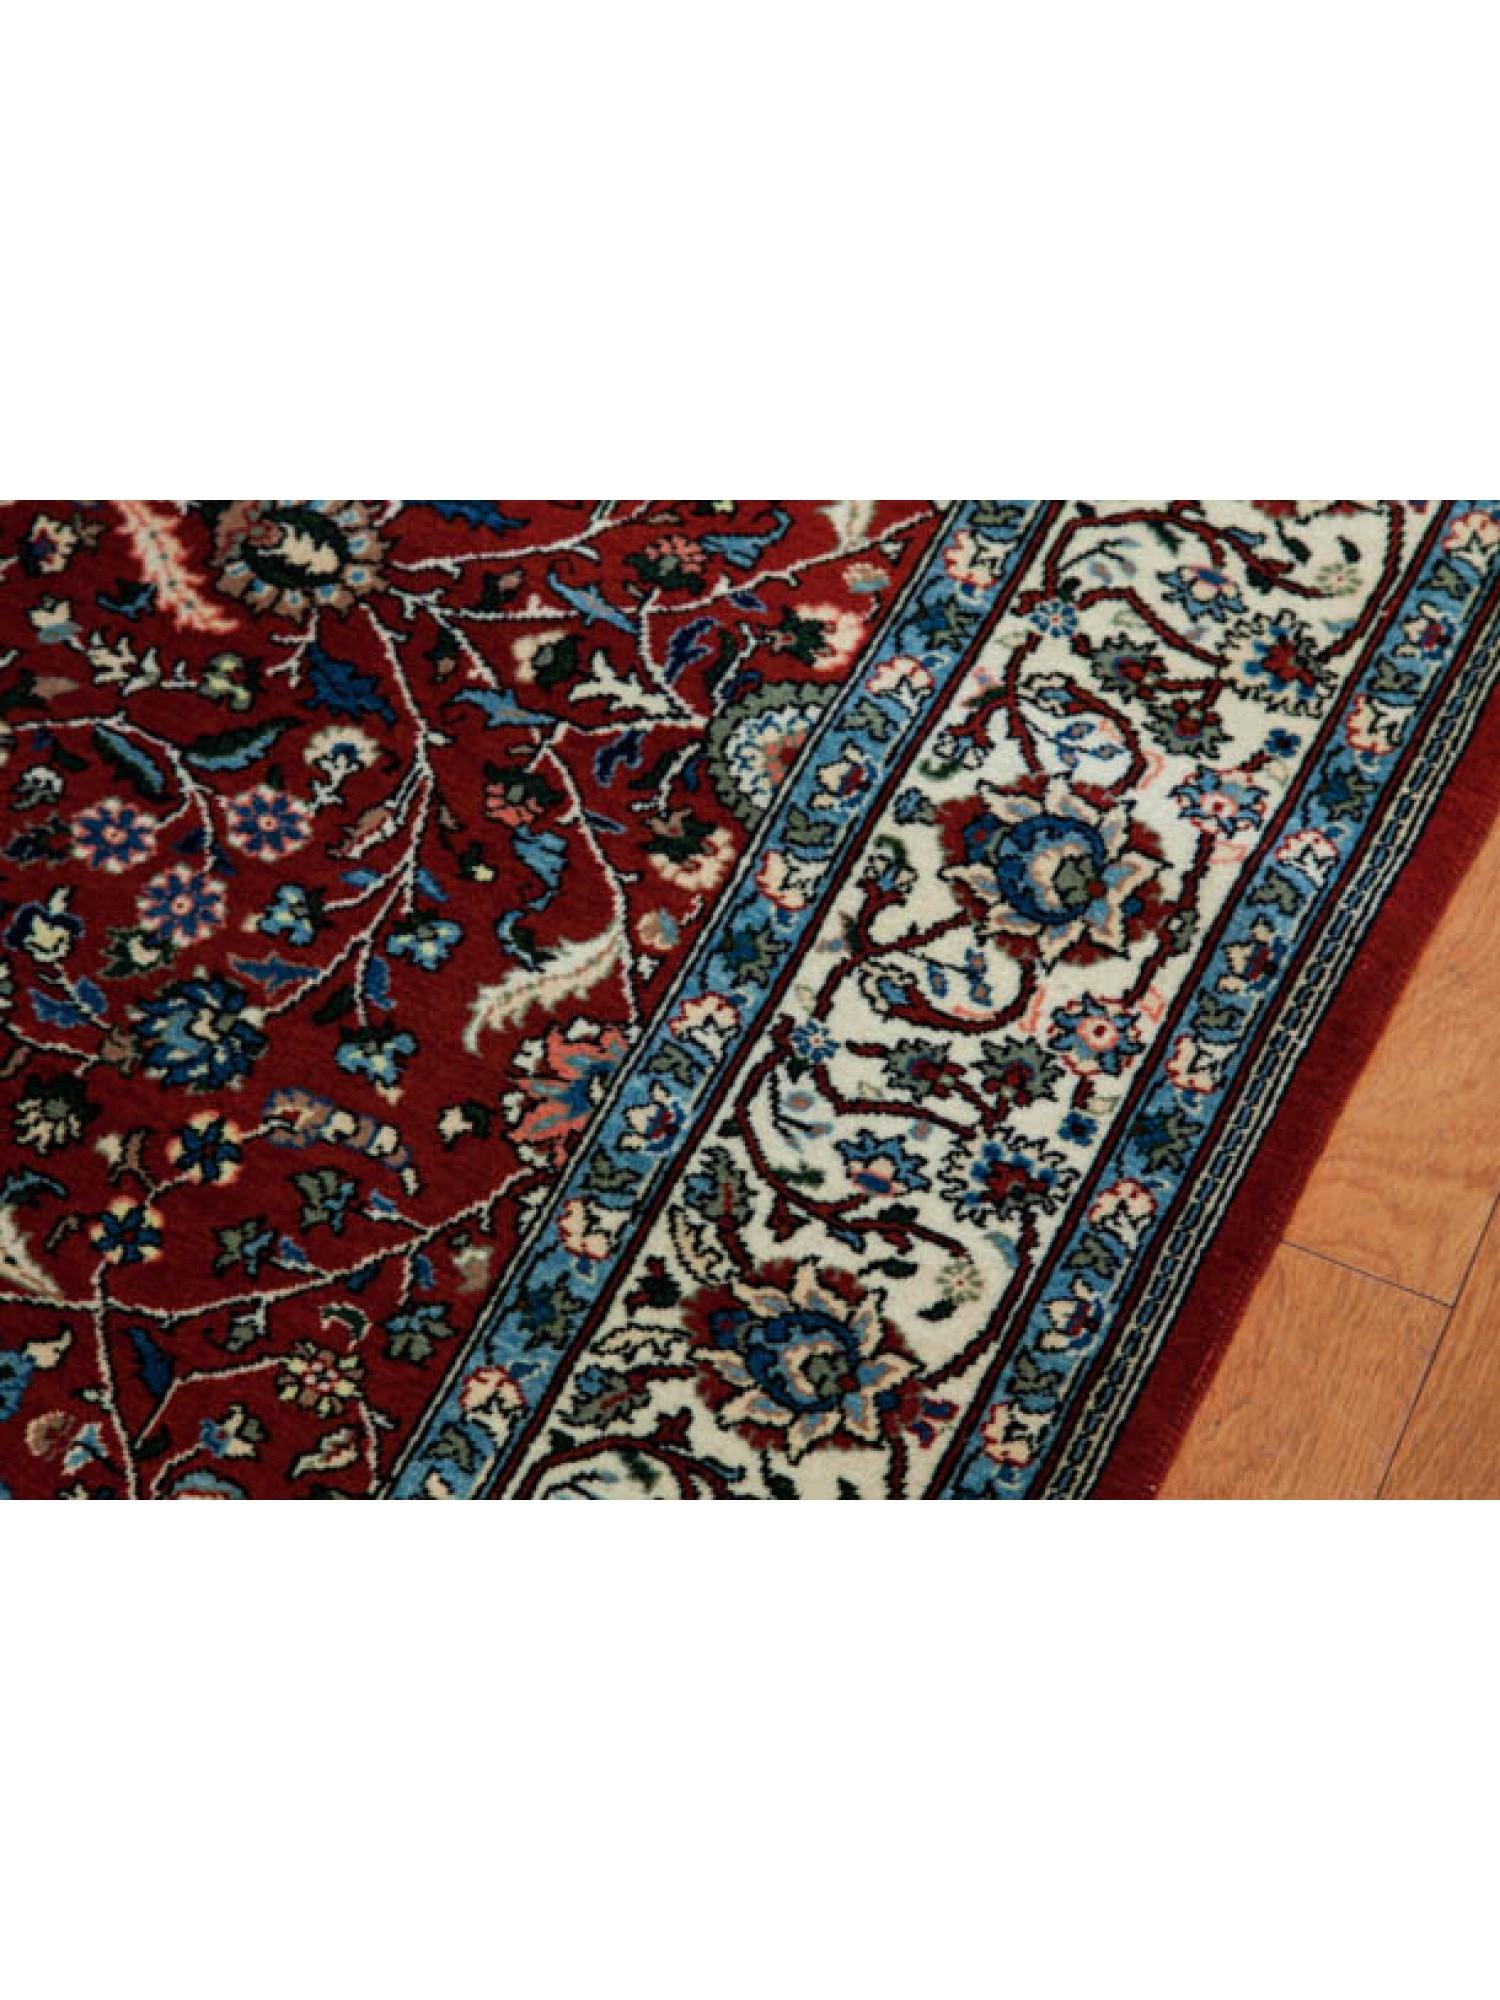 Hand-Woven Hereke Wool & Cotton Carpet, Turkish Anatolian Rug